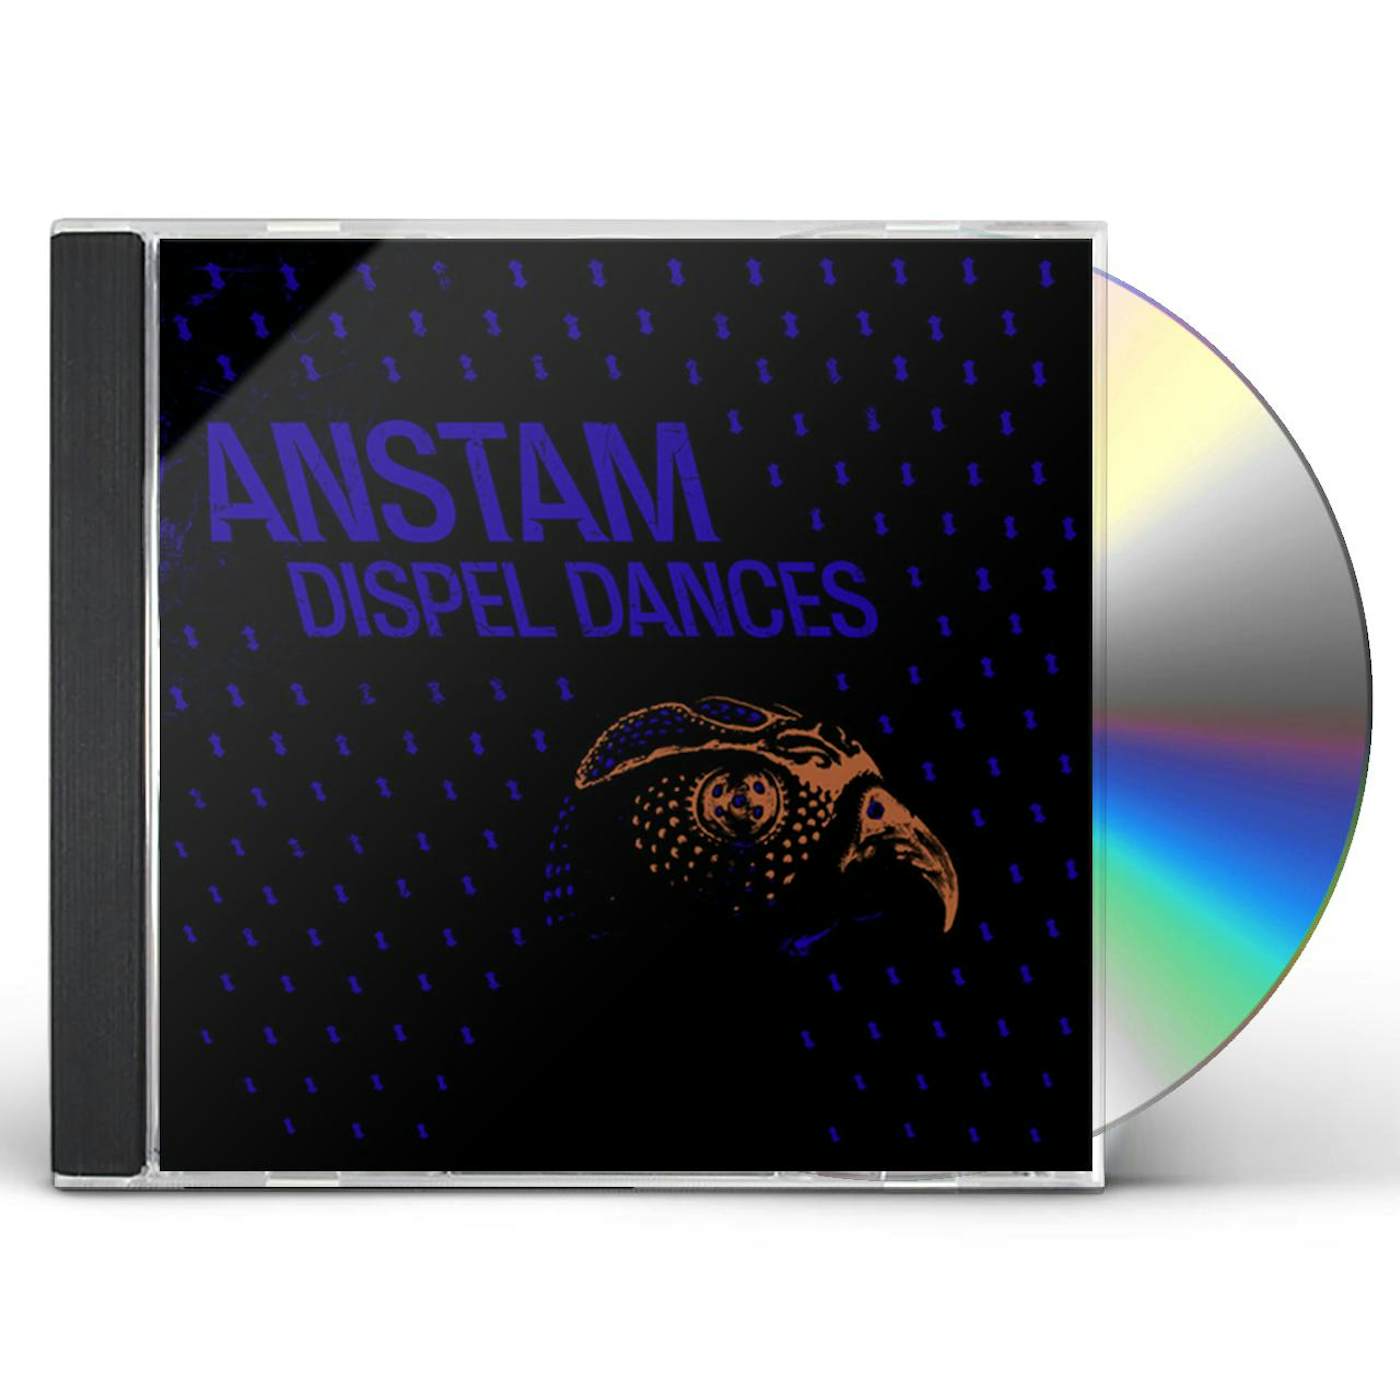 Anstam DISPEL DANCES CD